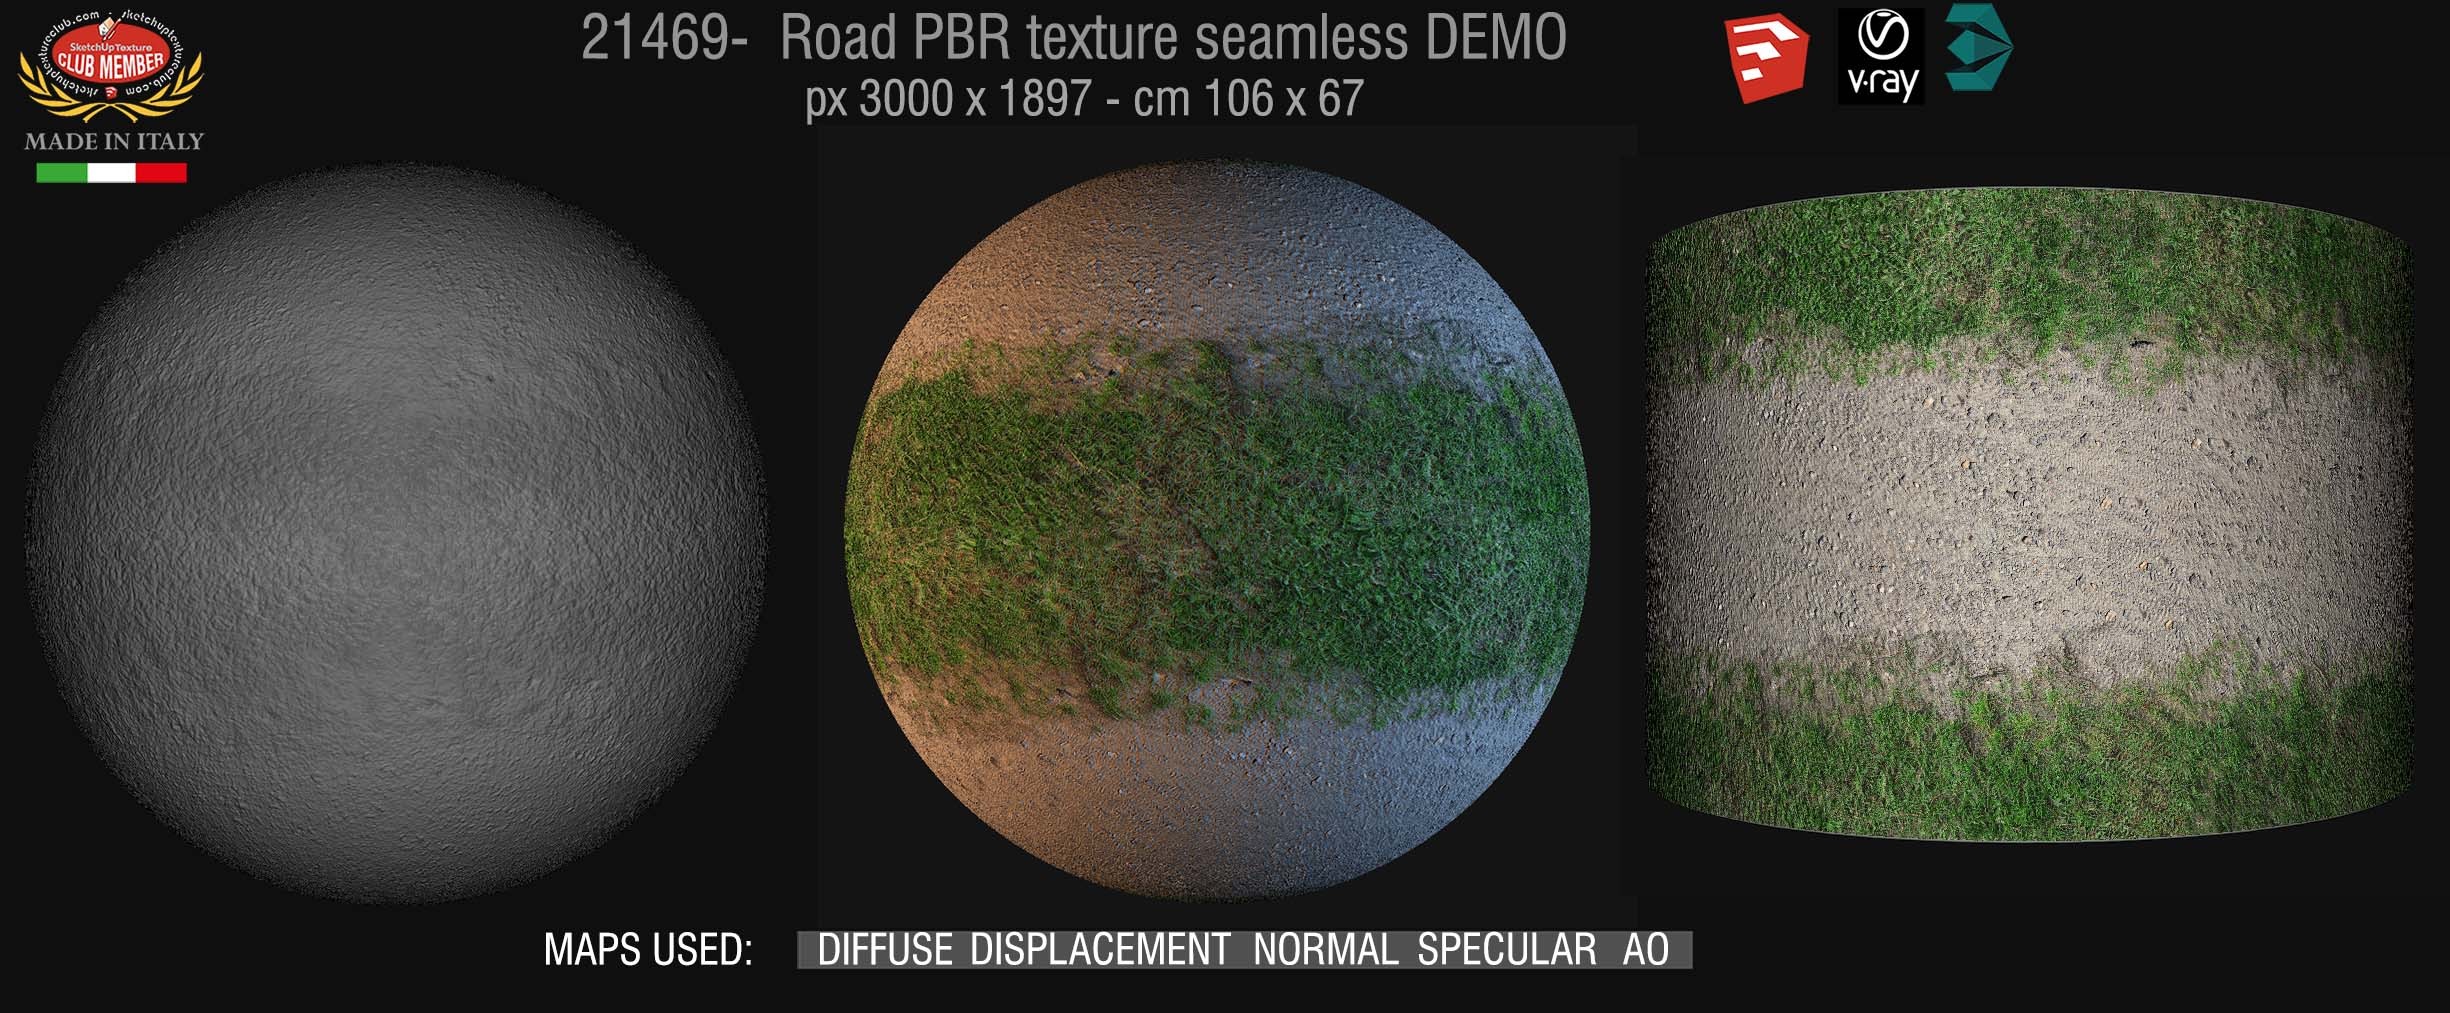 20469 Dirt road PBR texture seamless DEMO